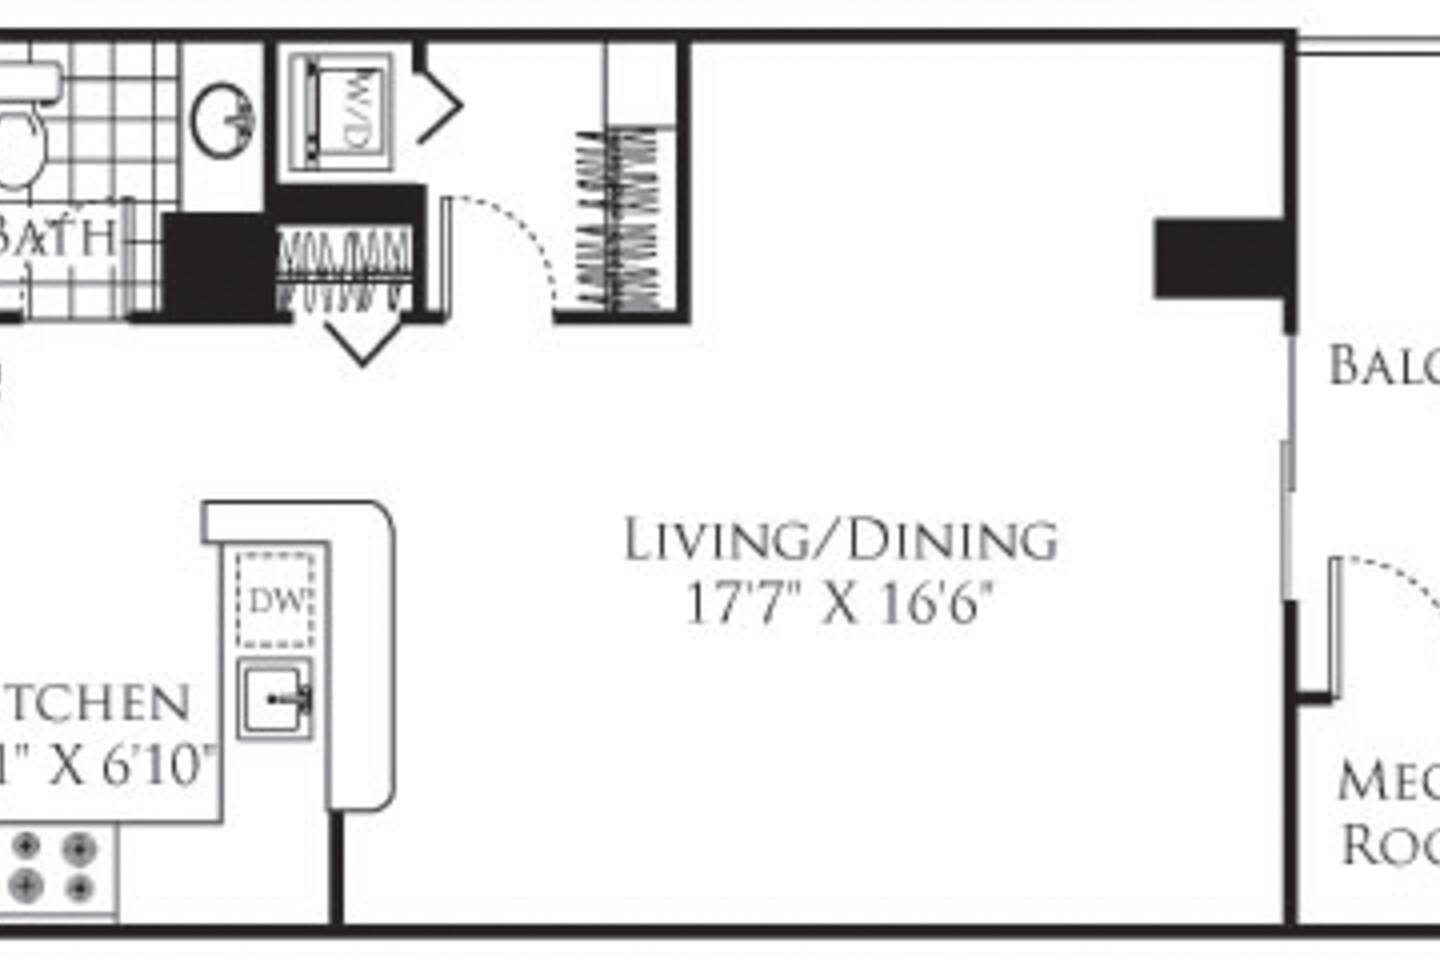 Floorplan diagram for Ashford 1, showing Studio